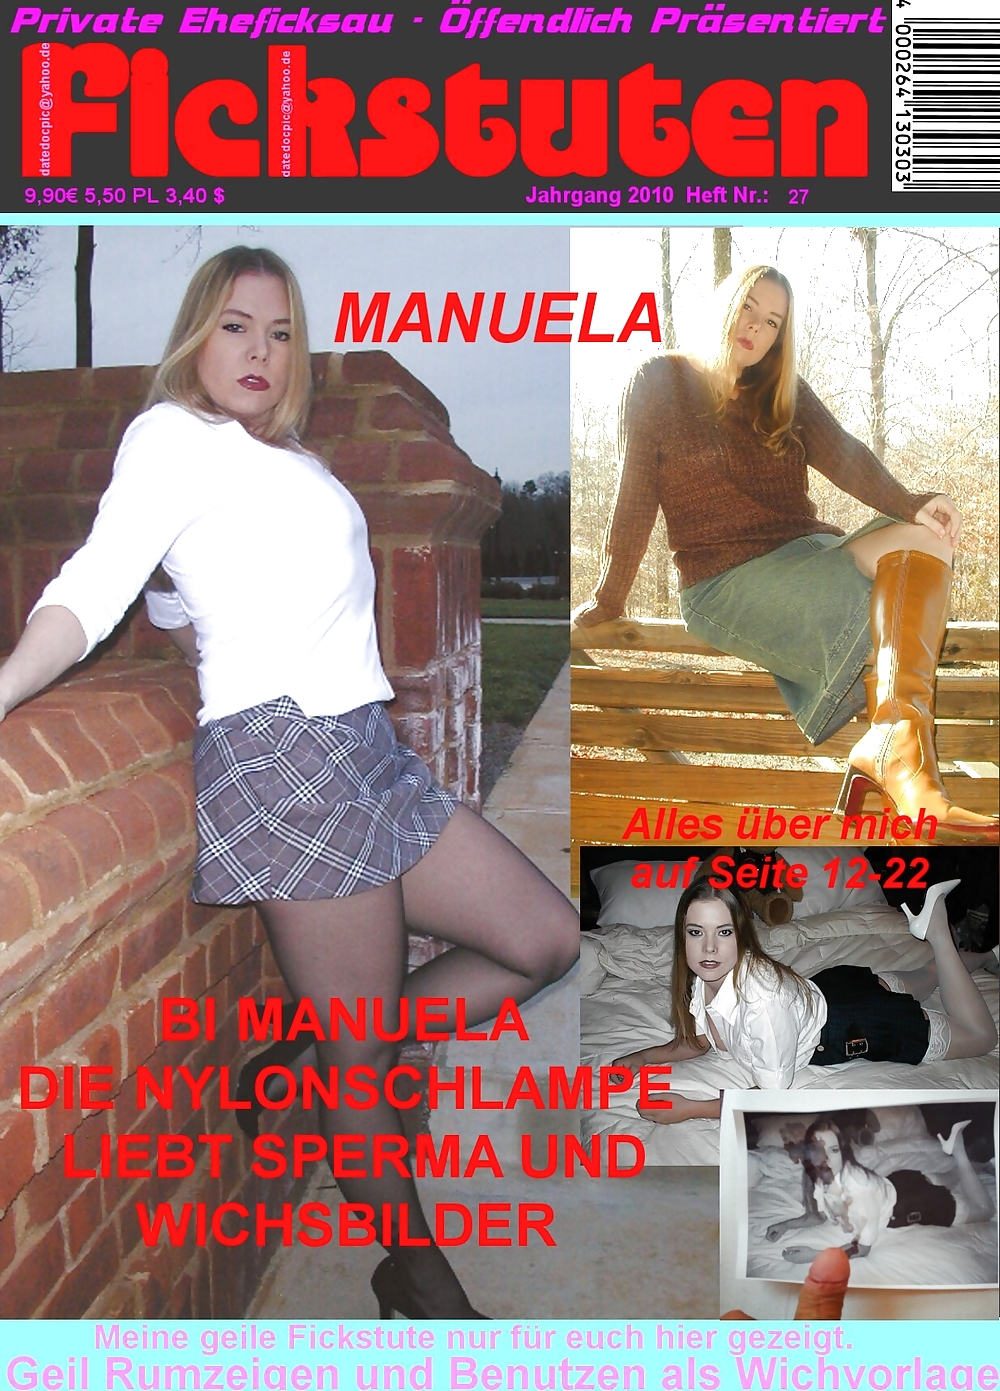 Free Manuela post photos